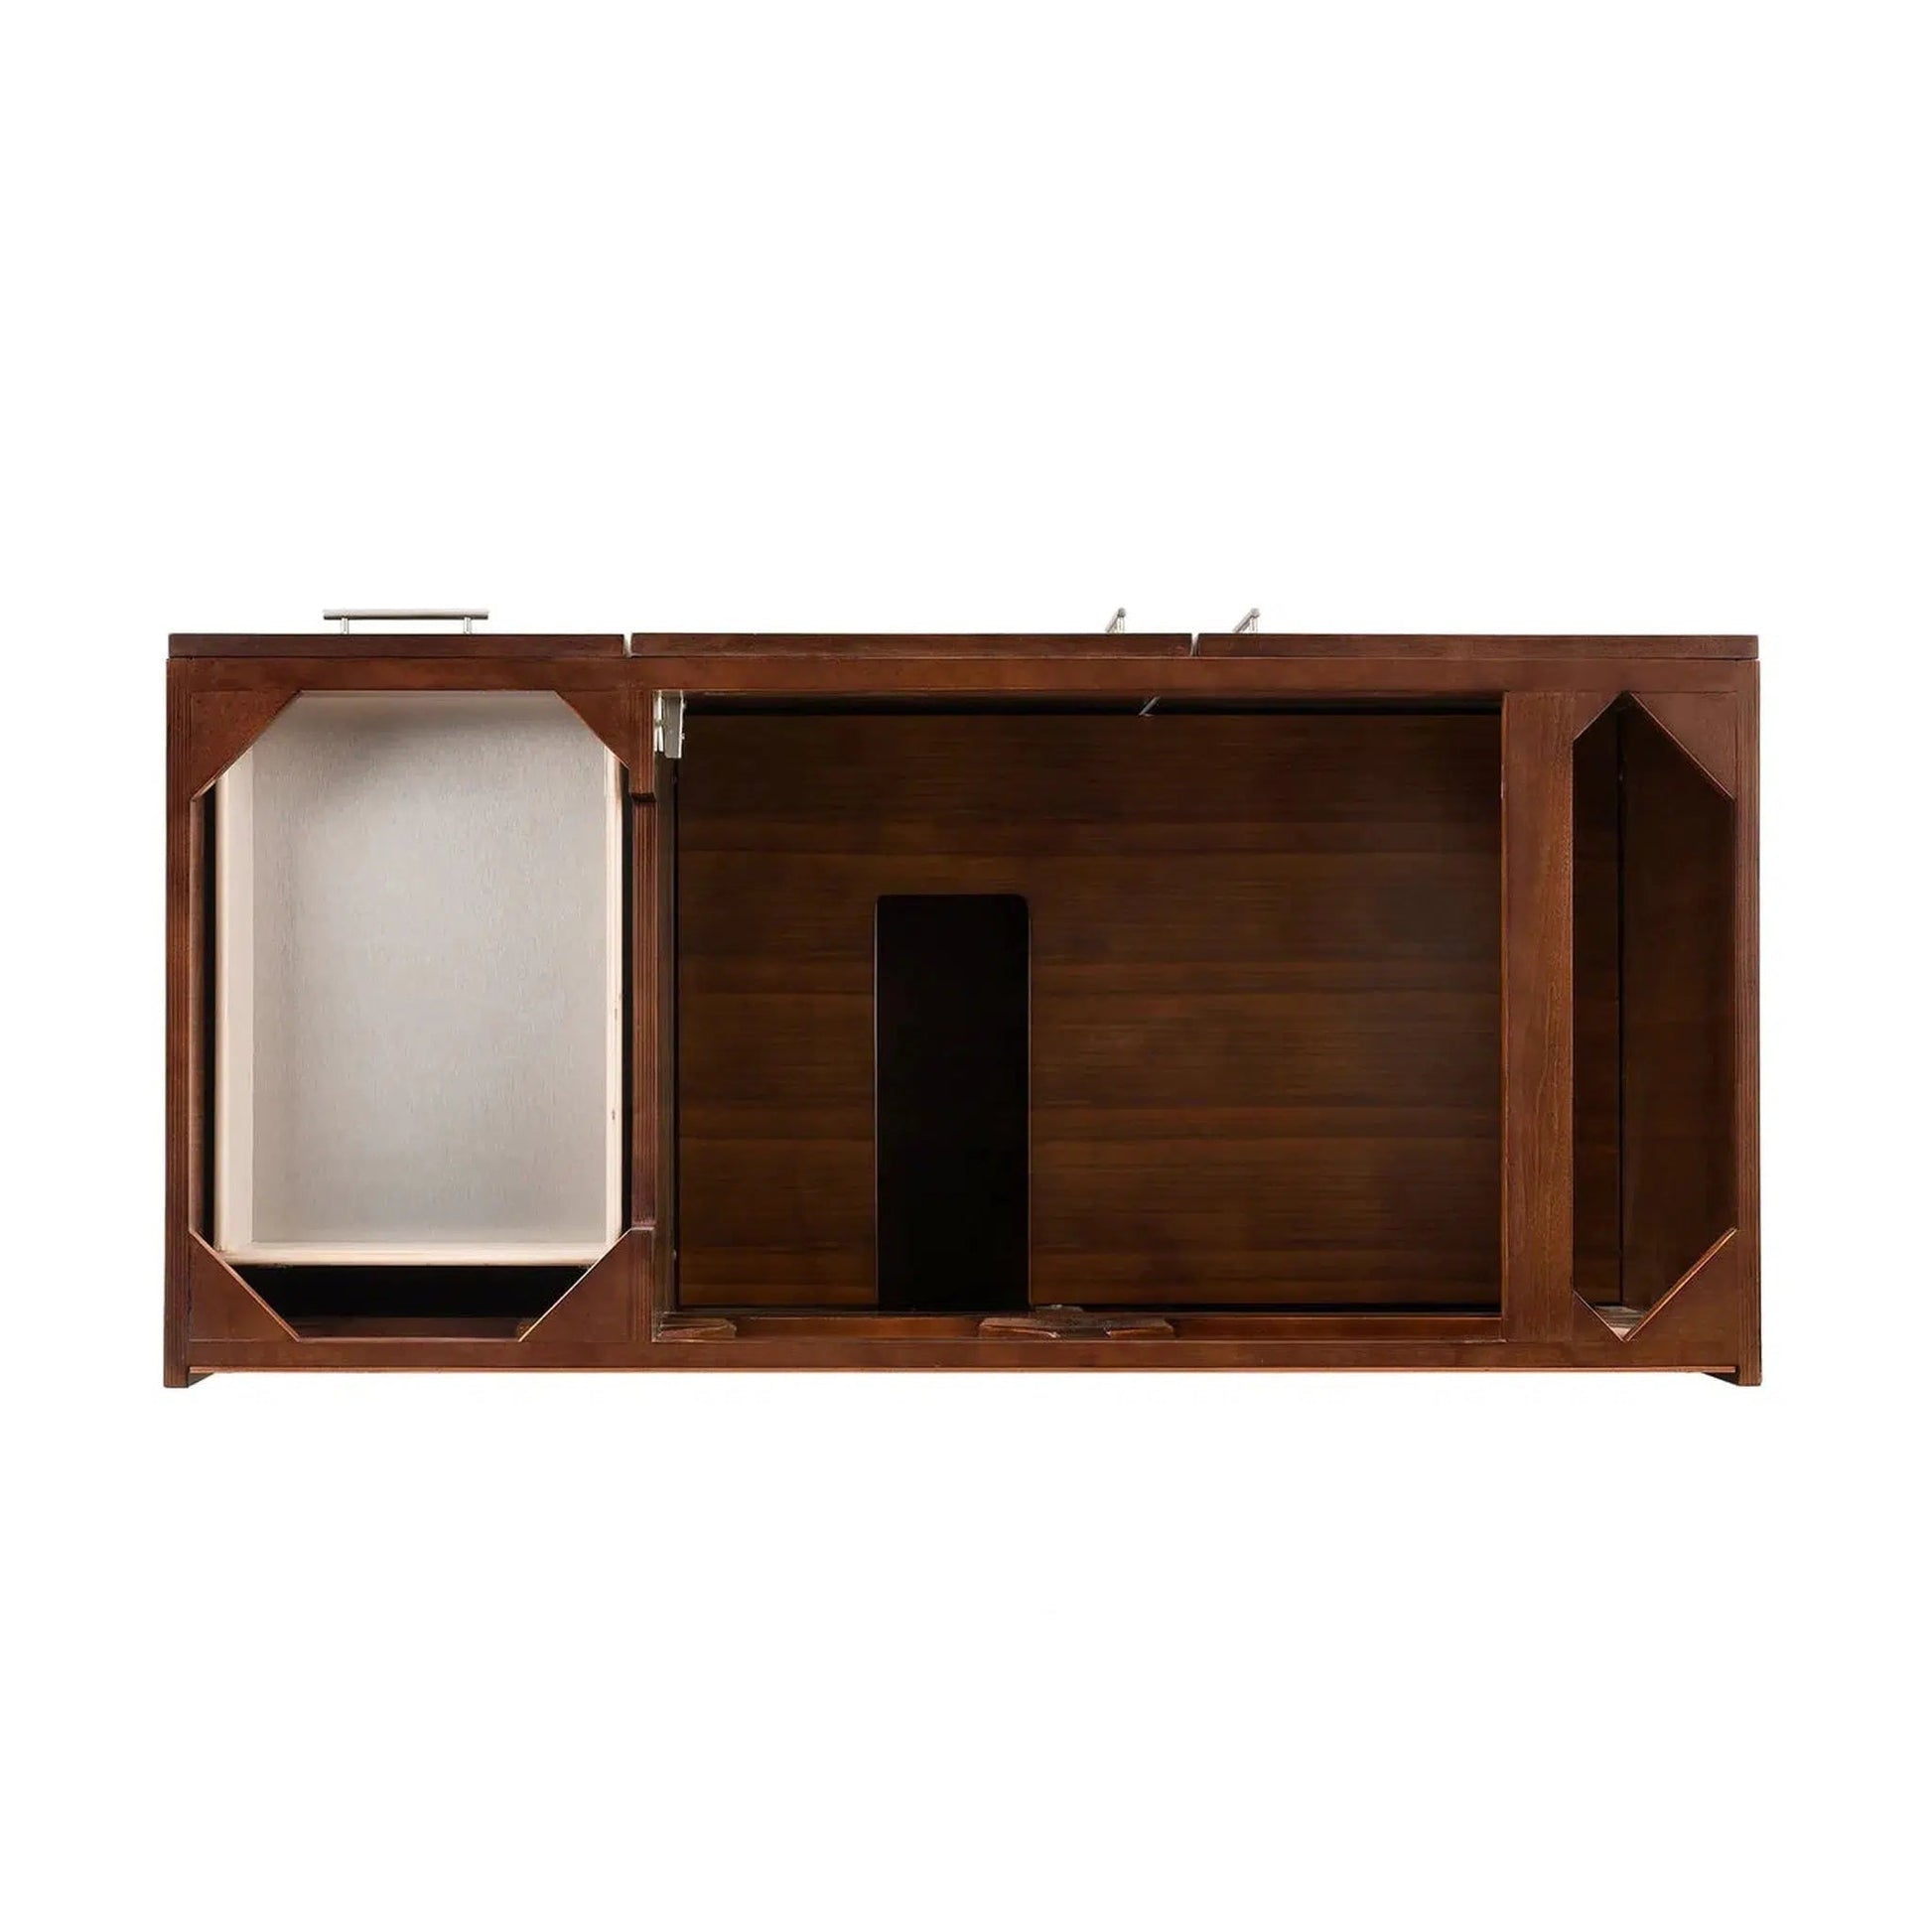 James Martin Metropolitan 48" Single American Walnut Bathroom Vanity With 1" Ethereal Noctis Quartz Top and Rectangular Ceramic Sink